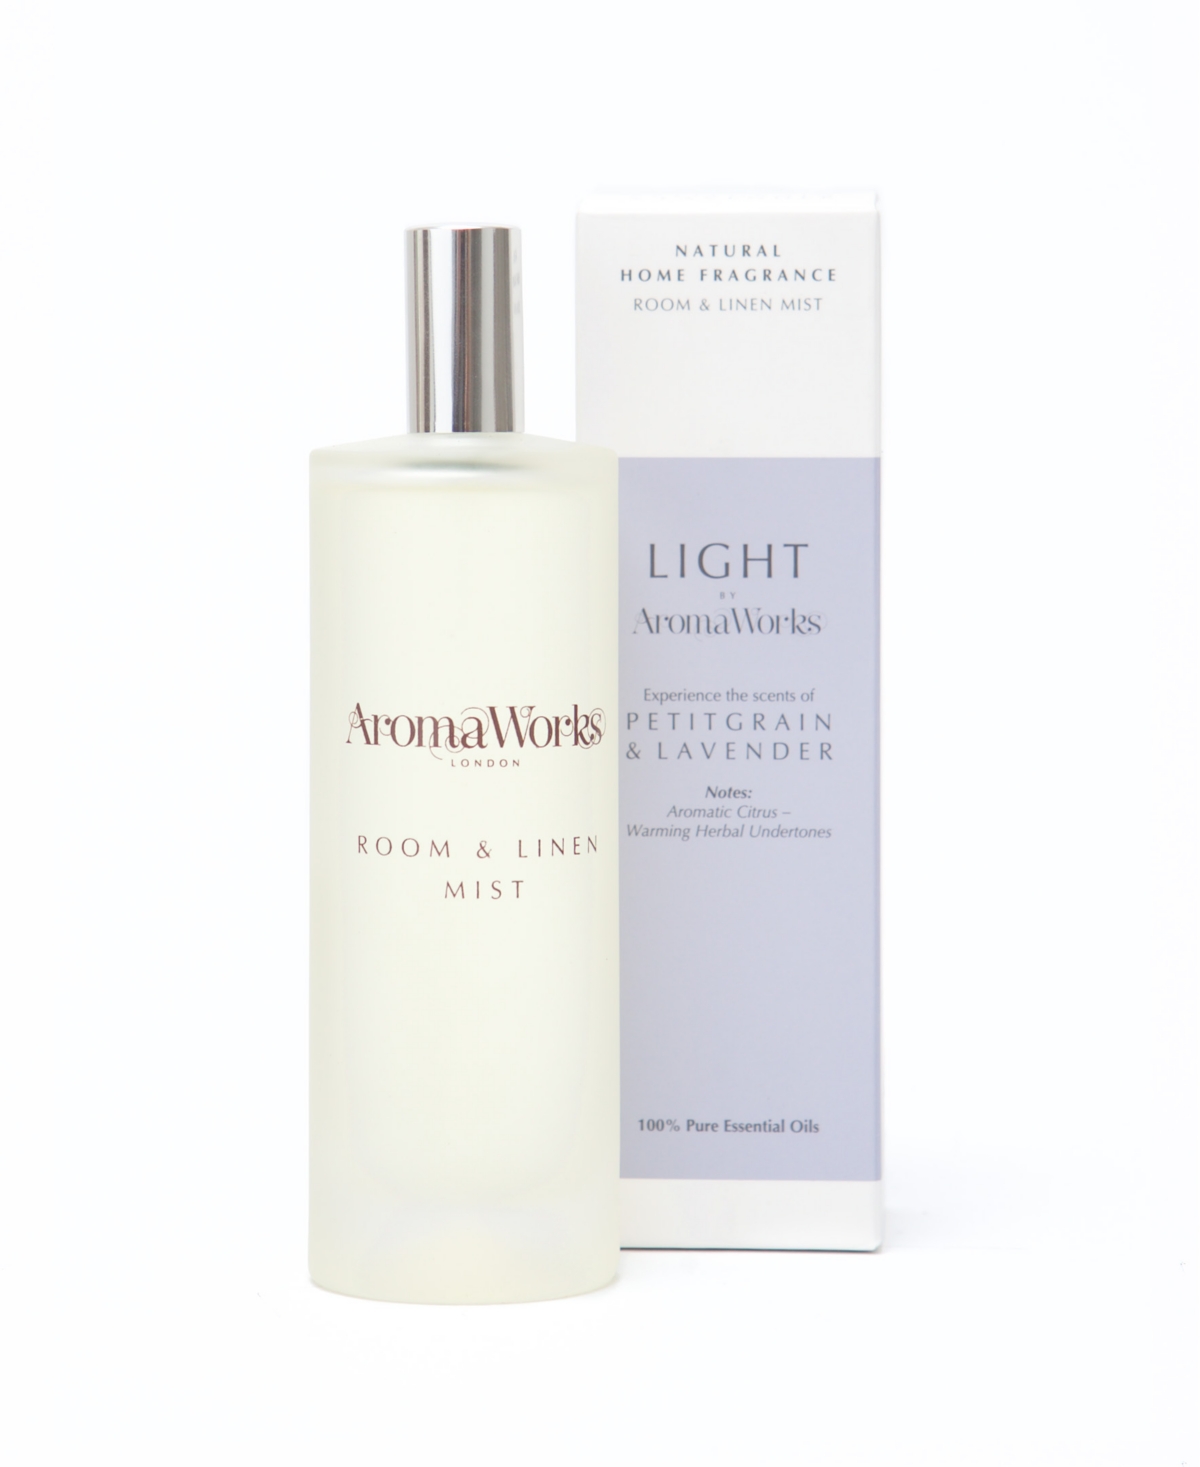 Aromaworks Light Range Petitgrain And Lavender Room And Linen Mist, 100 ml